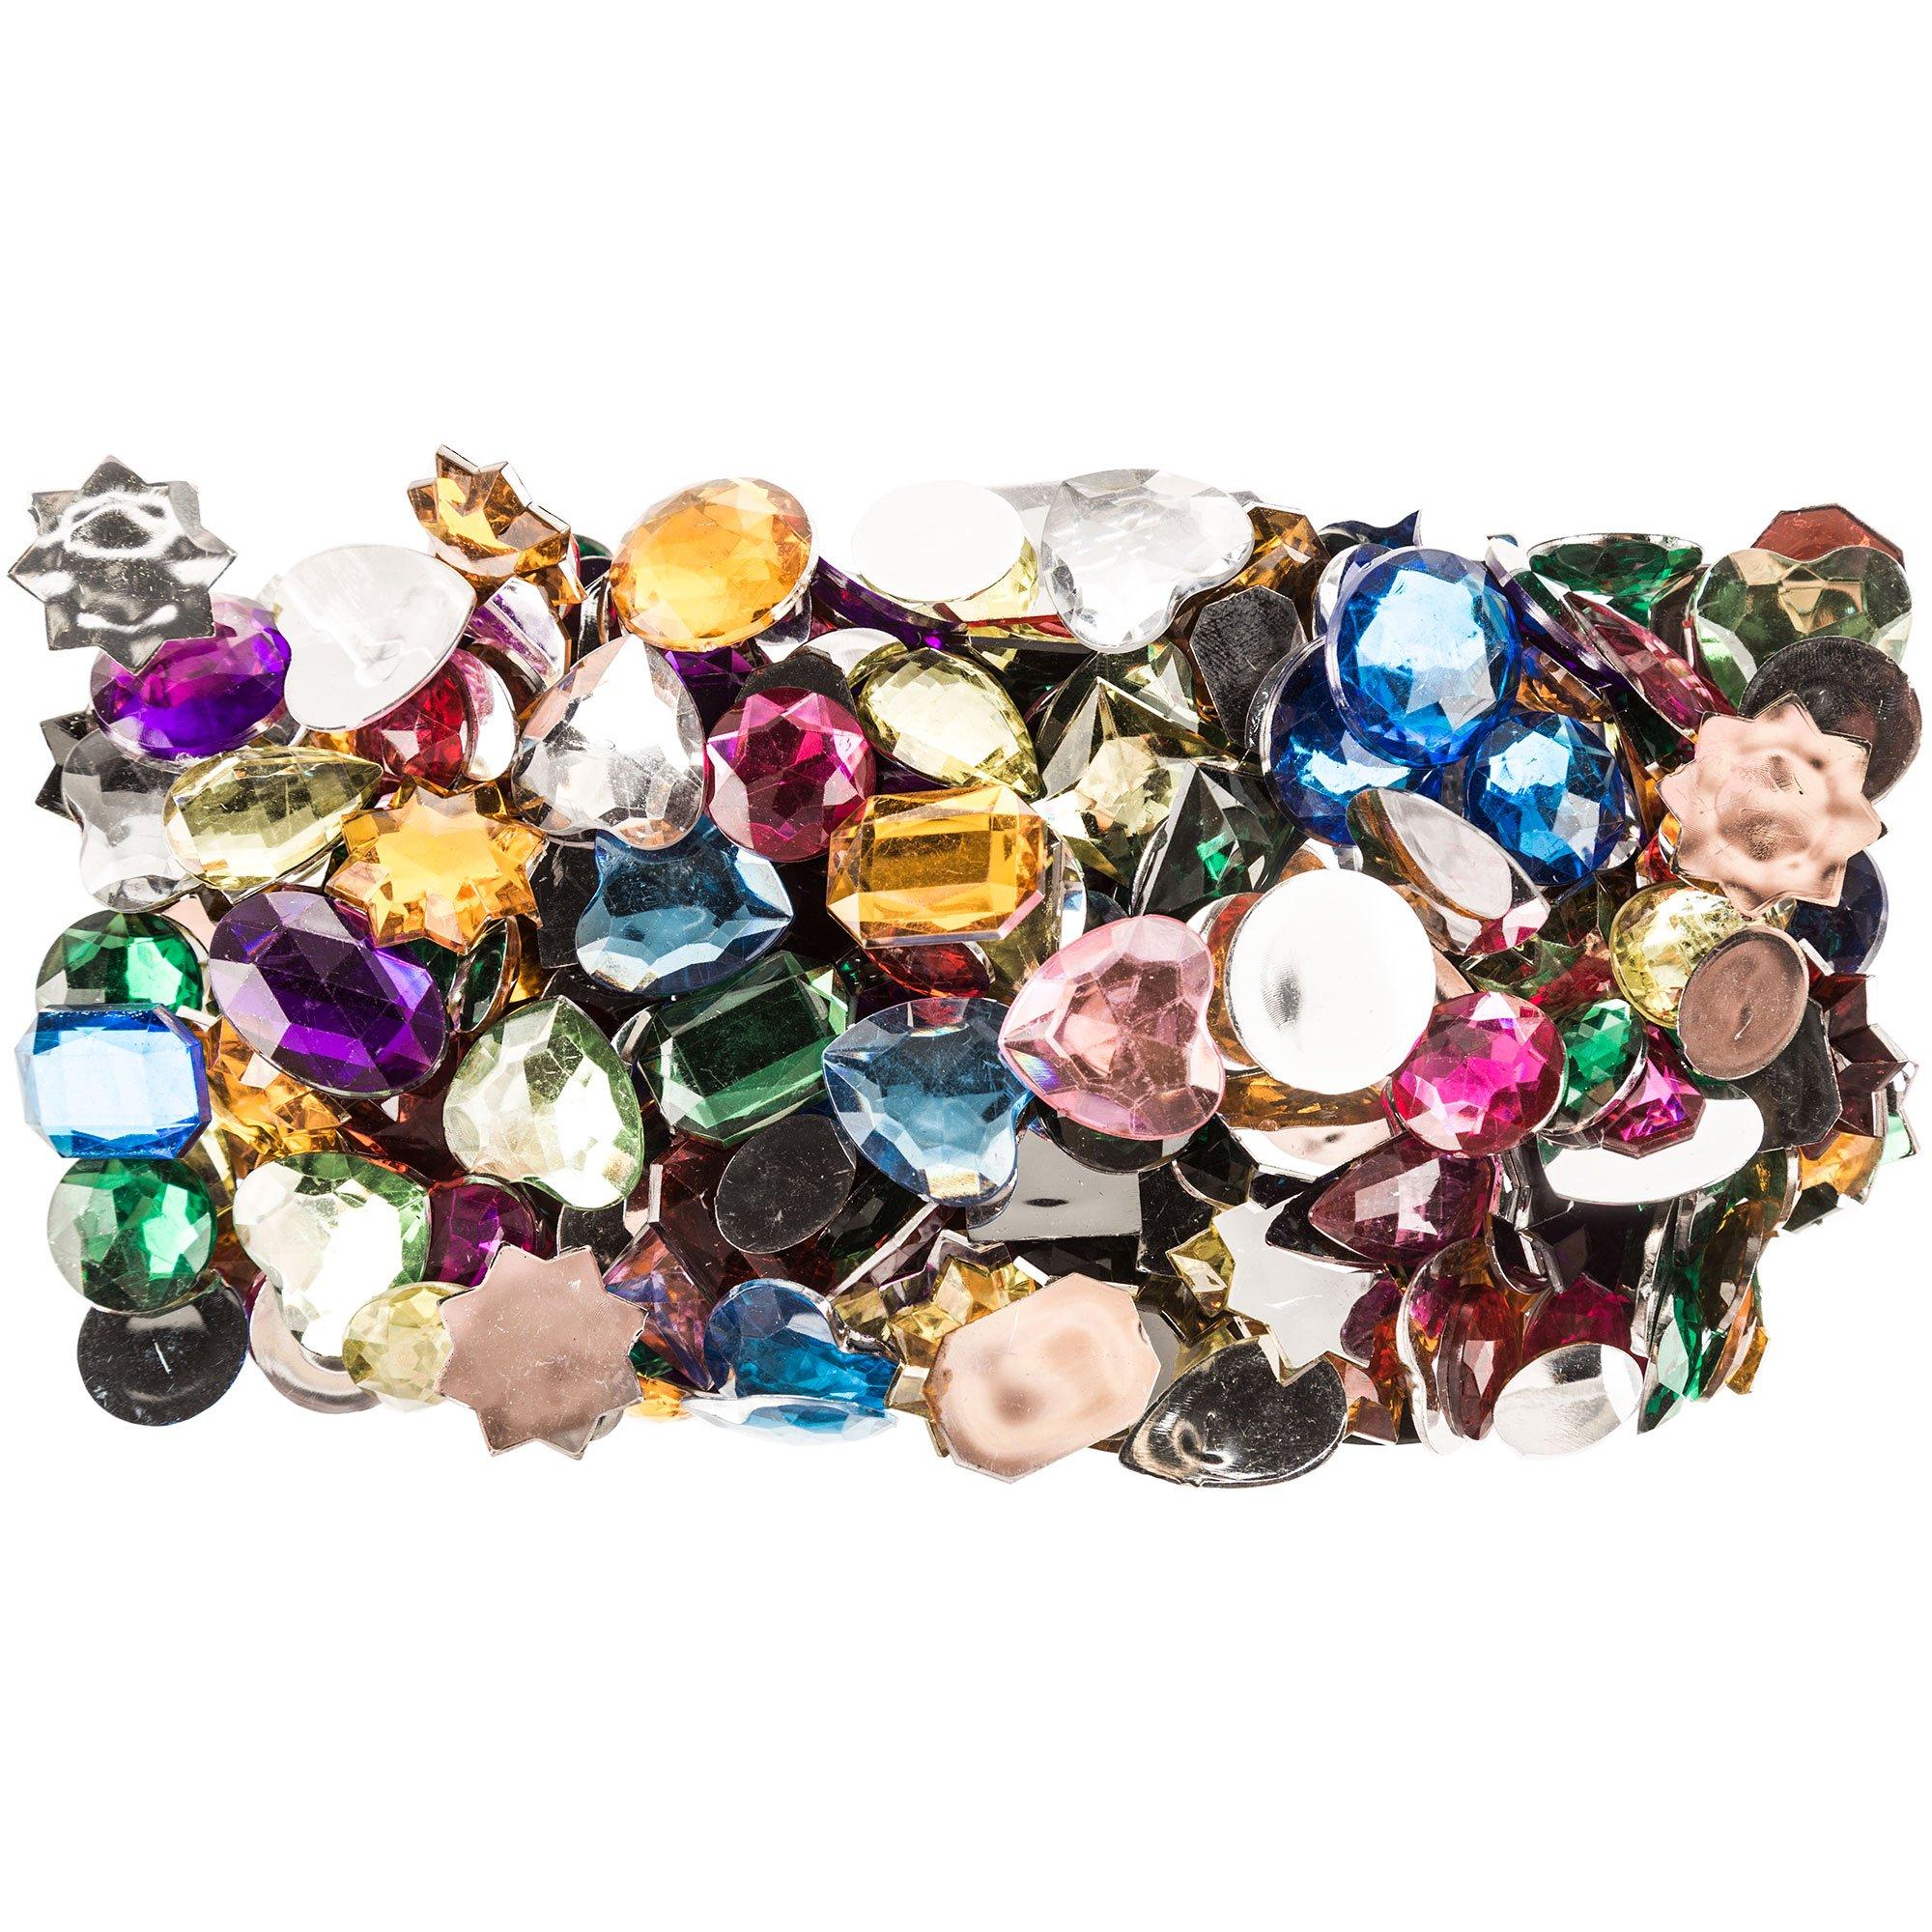 YYCRAFT Bulk Acrylic Gemstone Flatback Rhinestones Jewels for Crafting Gems  Assorted Colors, Shapes, and Sizes,Style 19